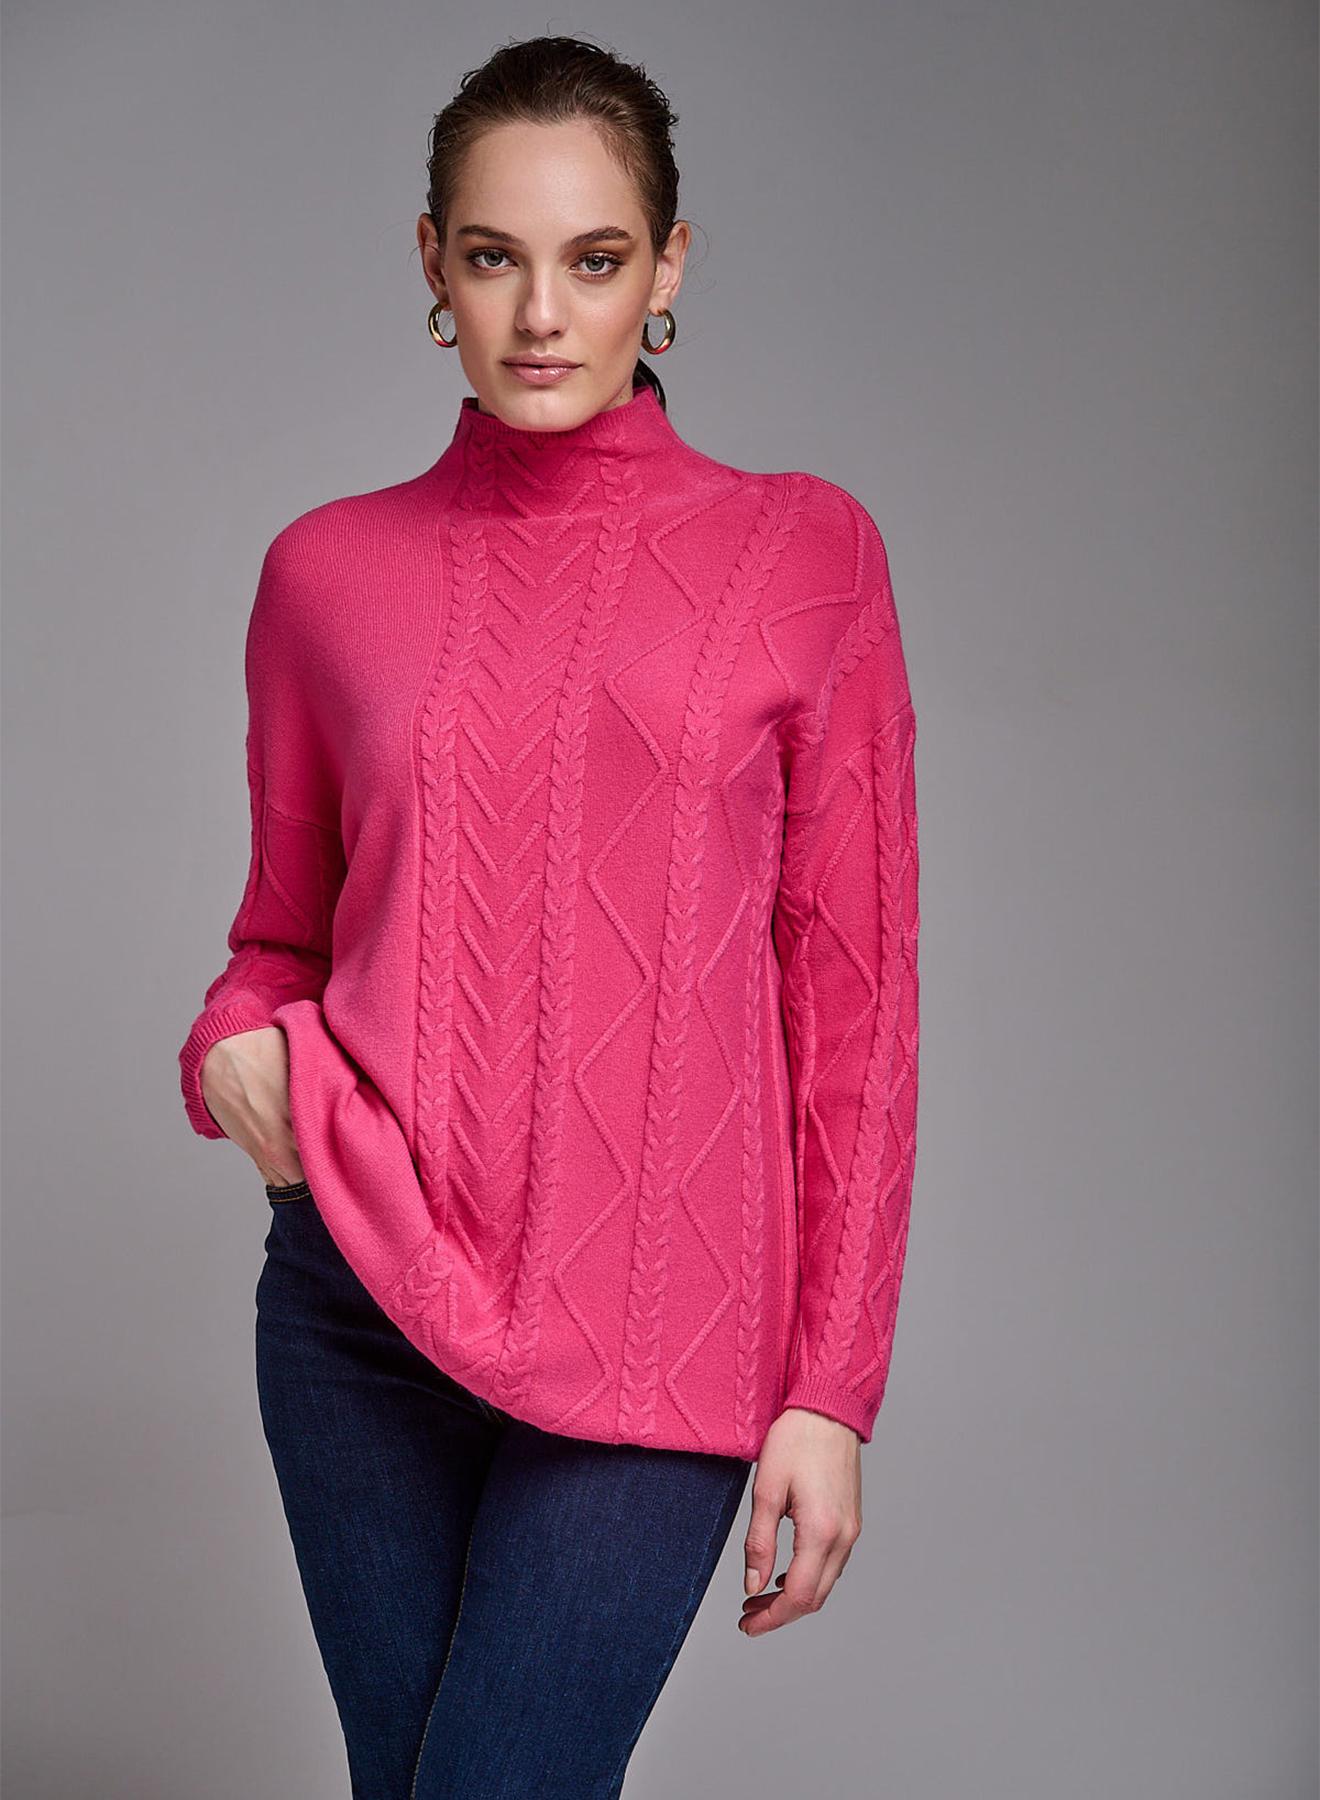 Half-turtleneck sweater with textured details - 2